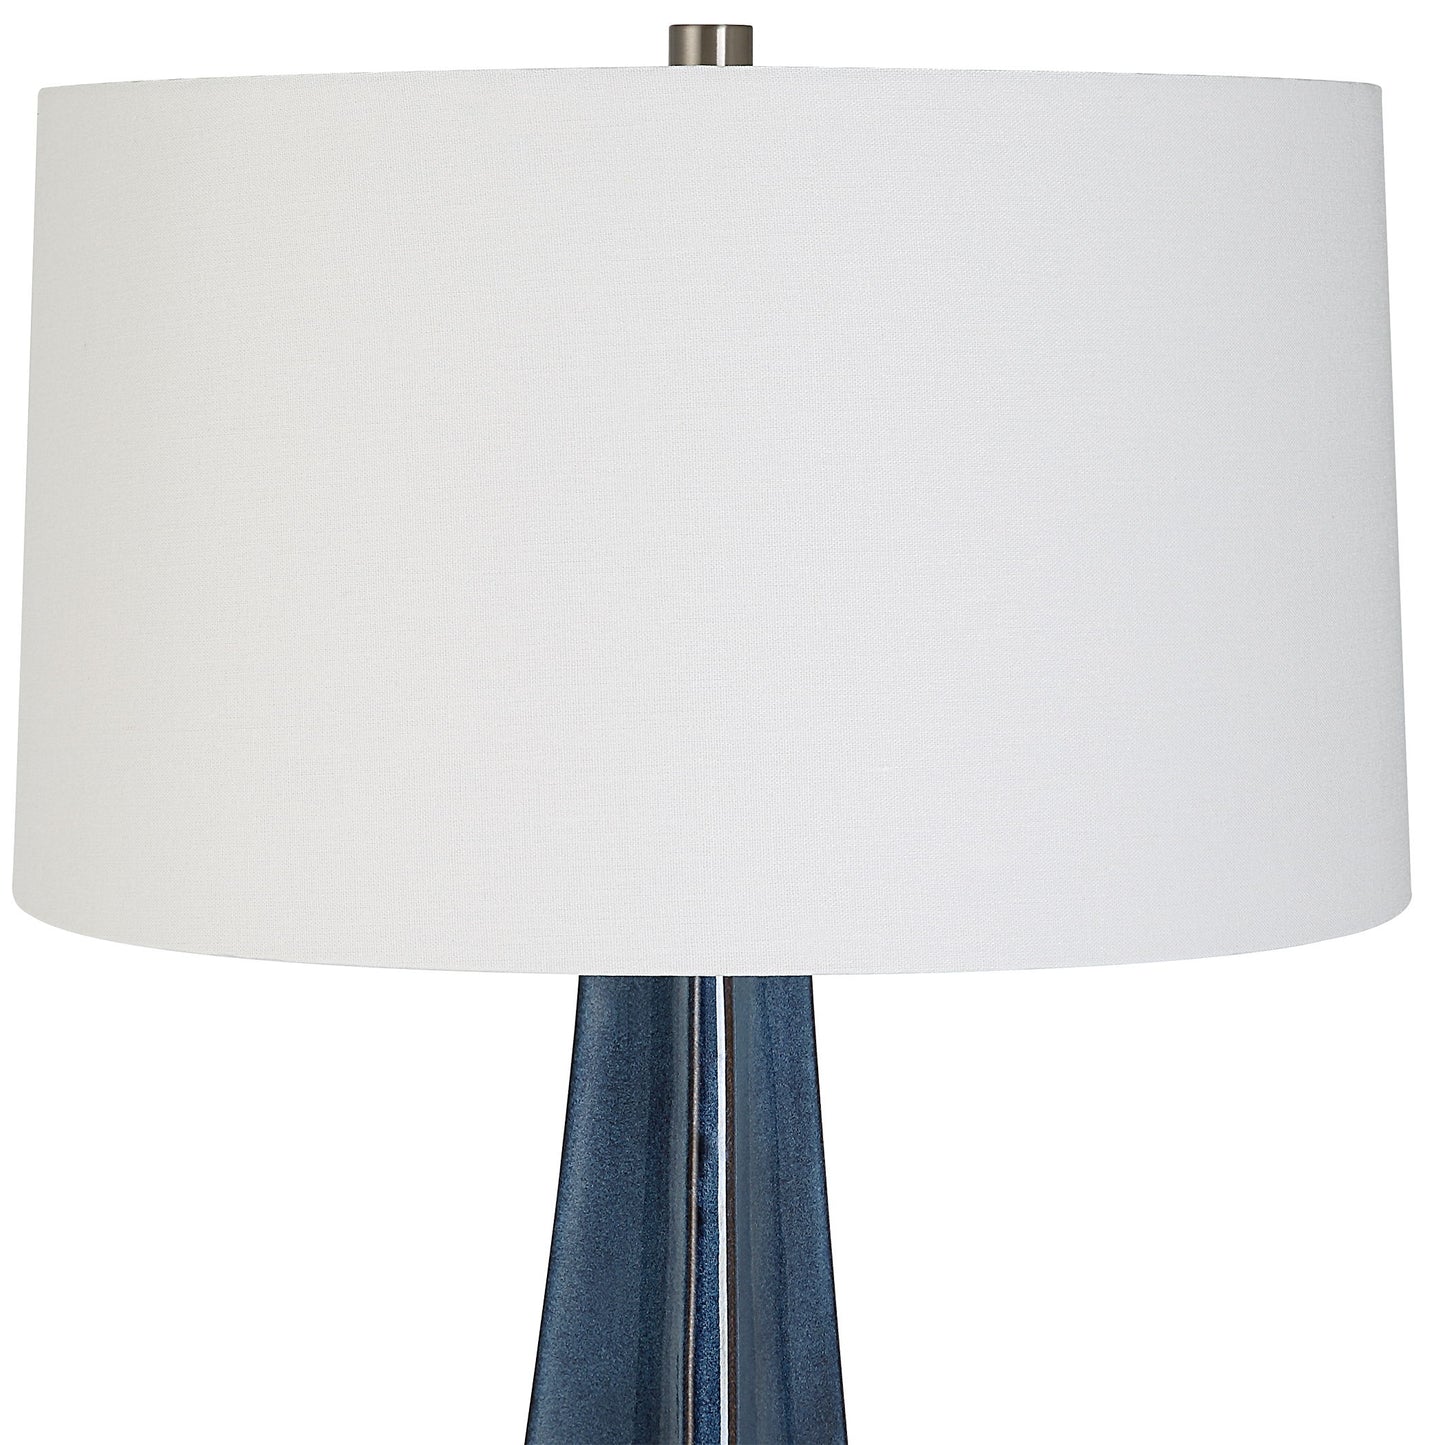 Teramo - Scalloped Ceramic Table Lamp - Blue